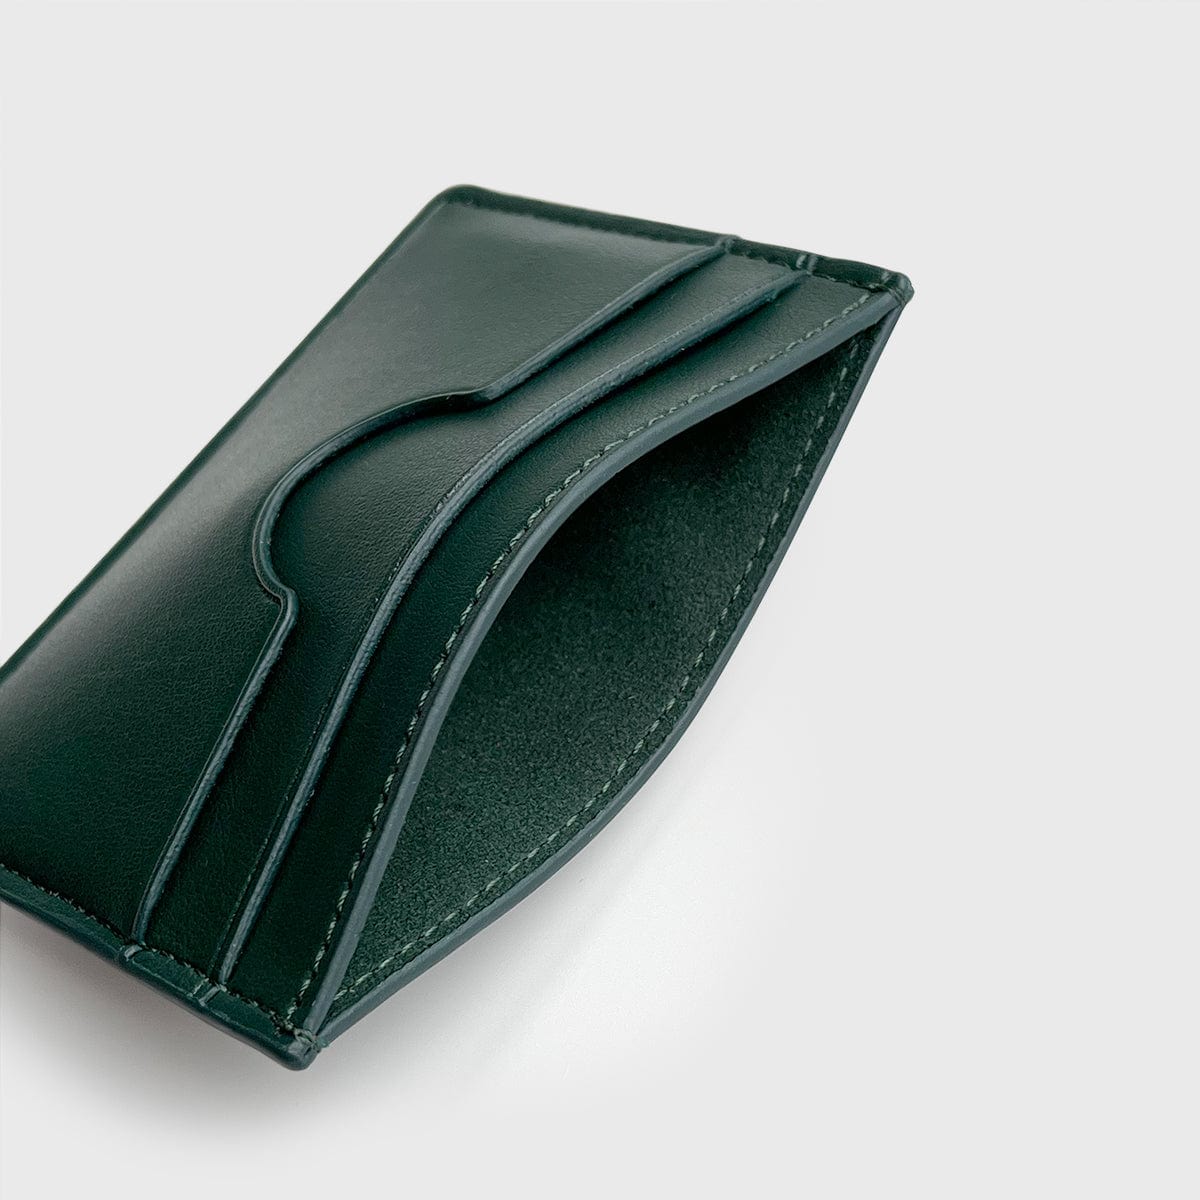 Oliver Co. London Premium Slim Card Holder (Forest Green / No) Forest Green / No